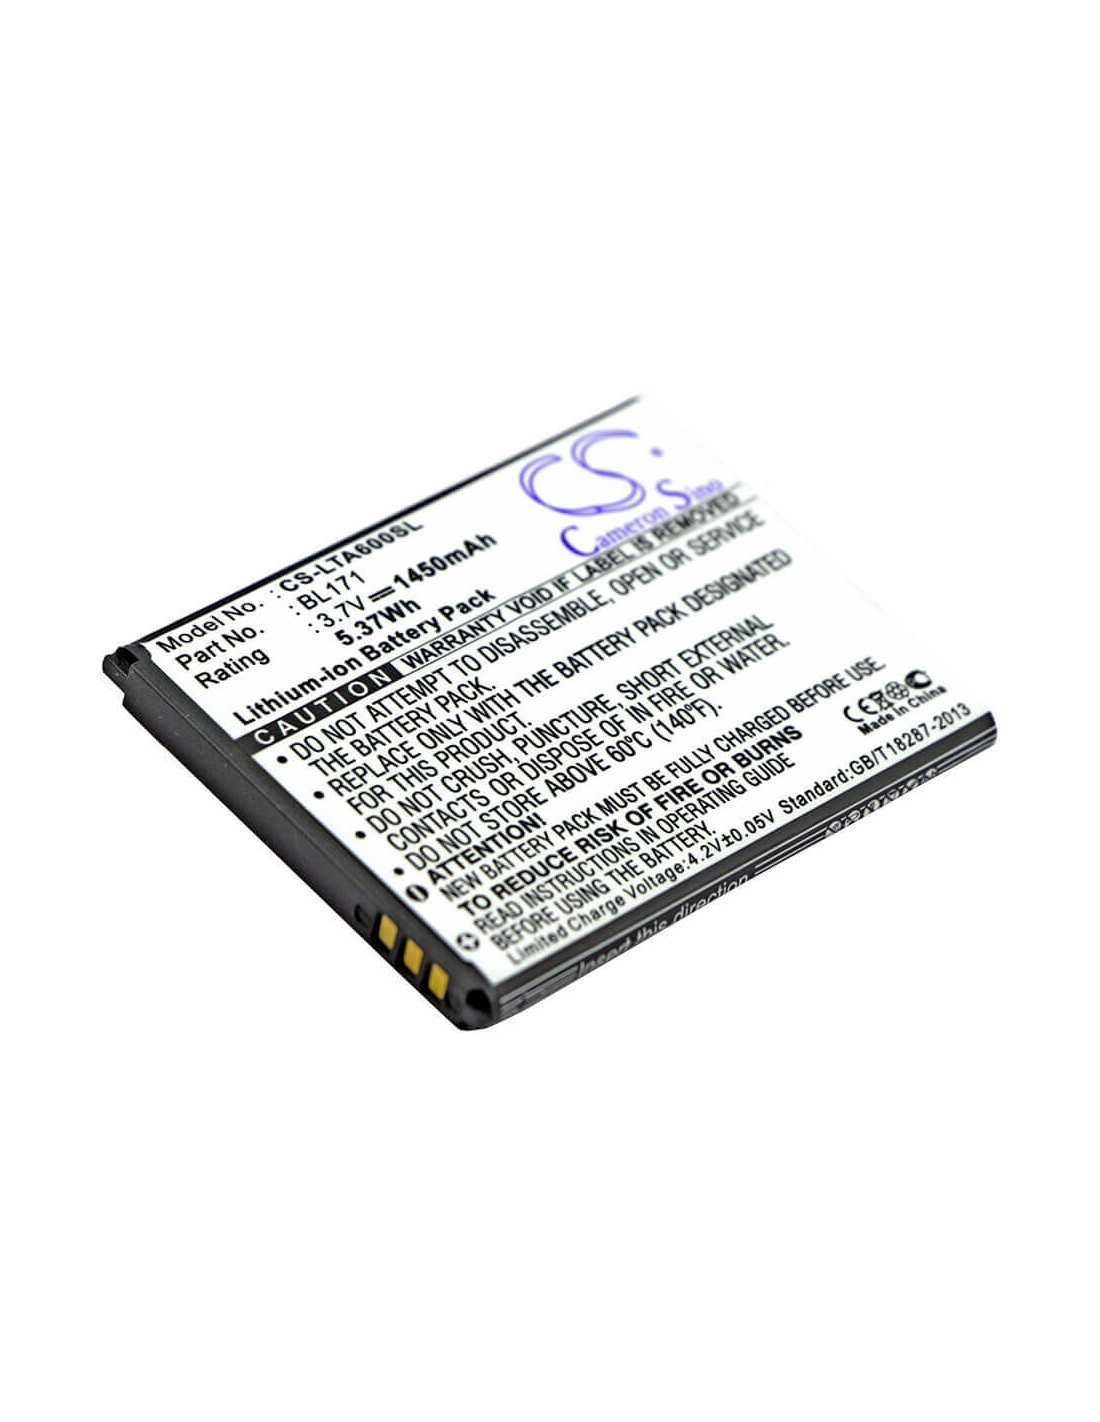 Battery for Lenovo A60, A65, A500 3.7V, 1450mAh - 5.37Wh